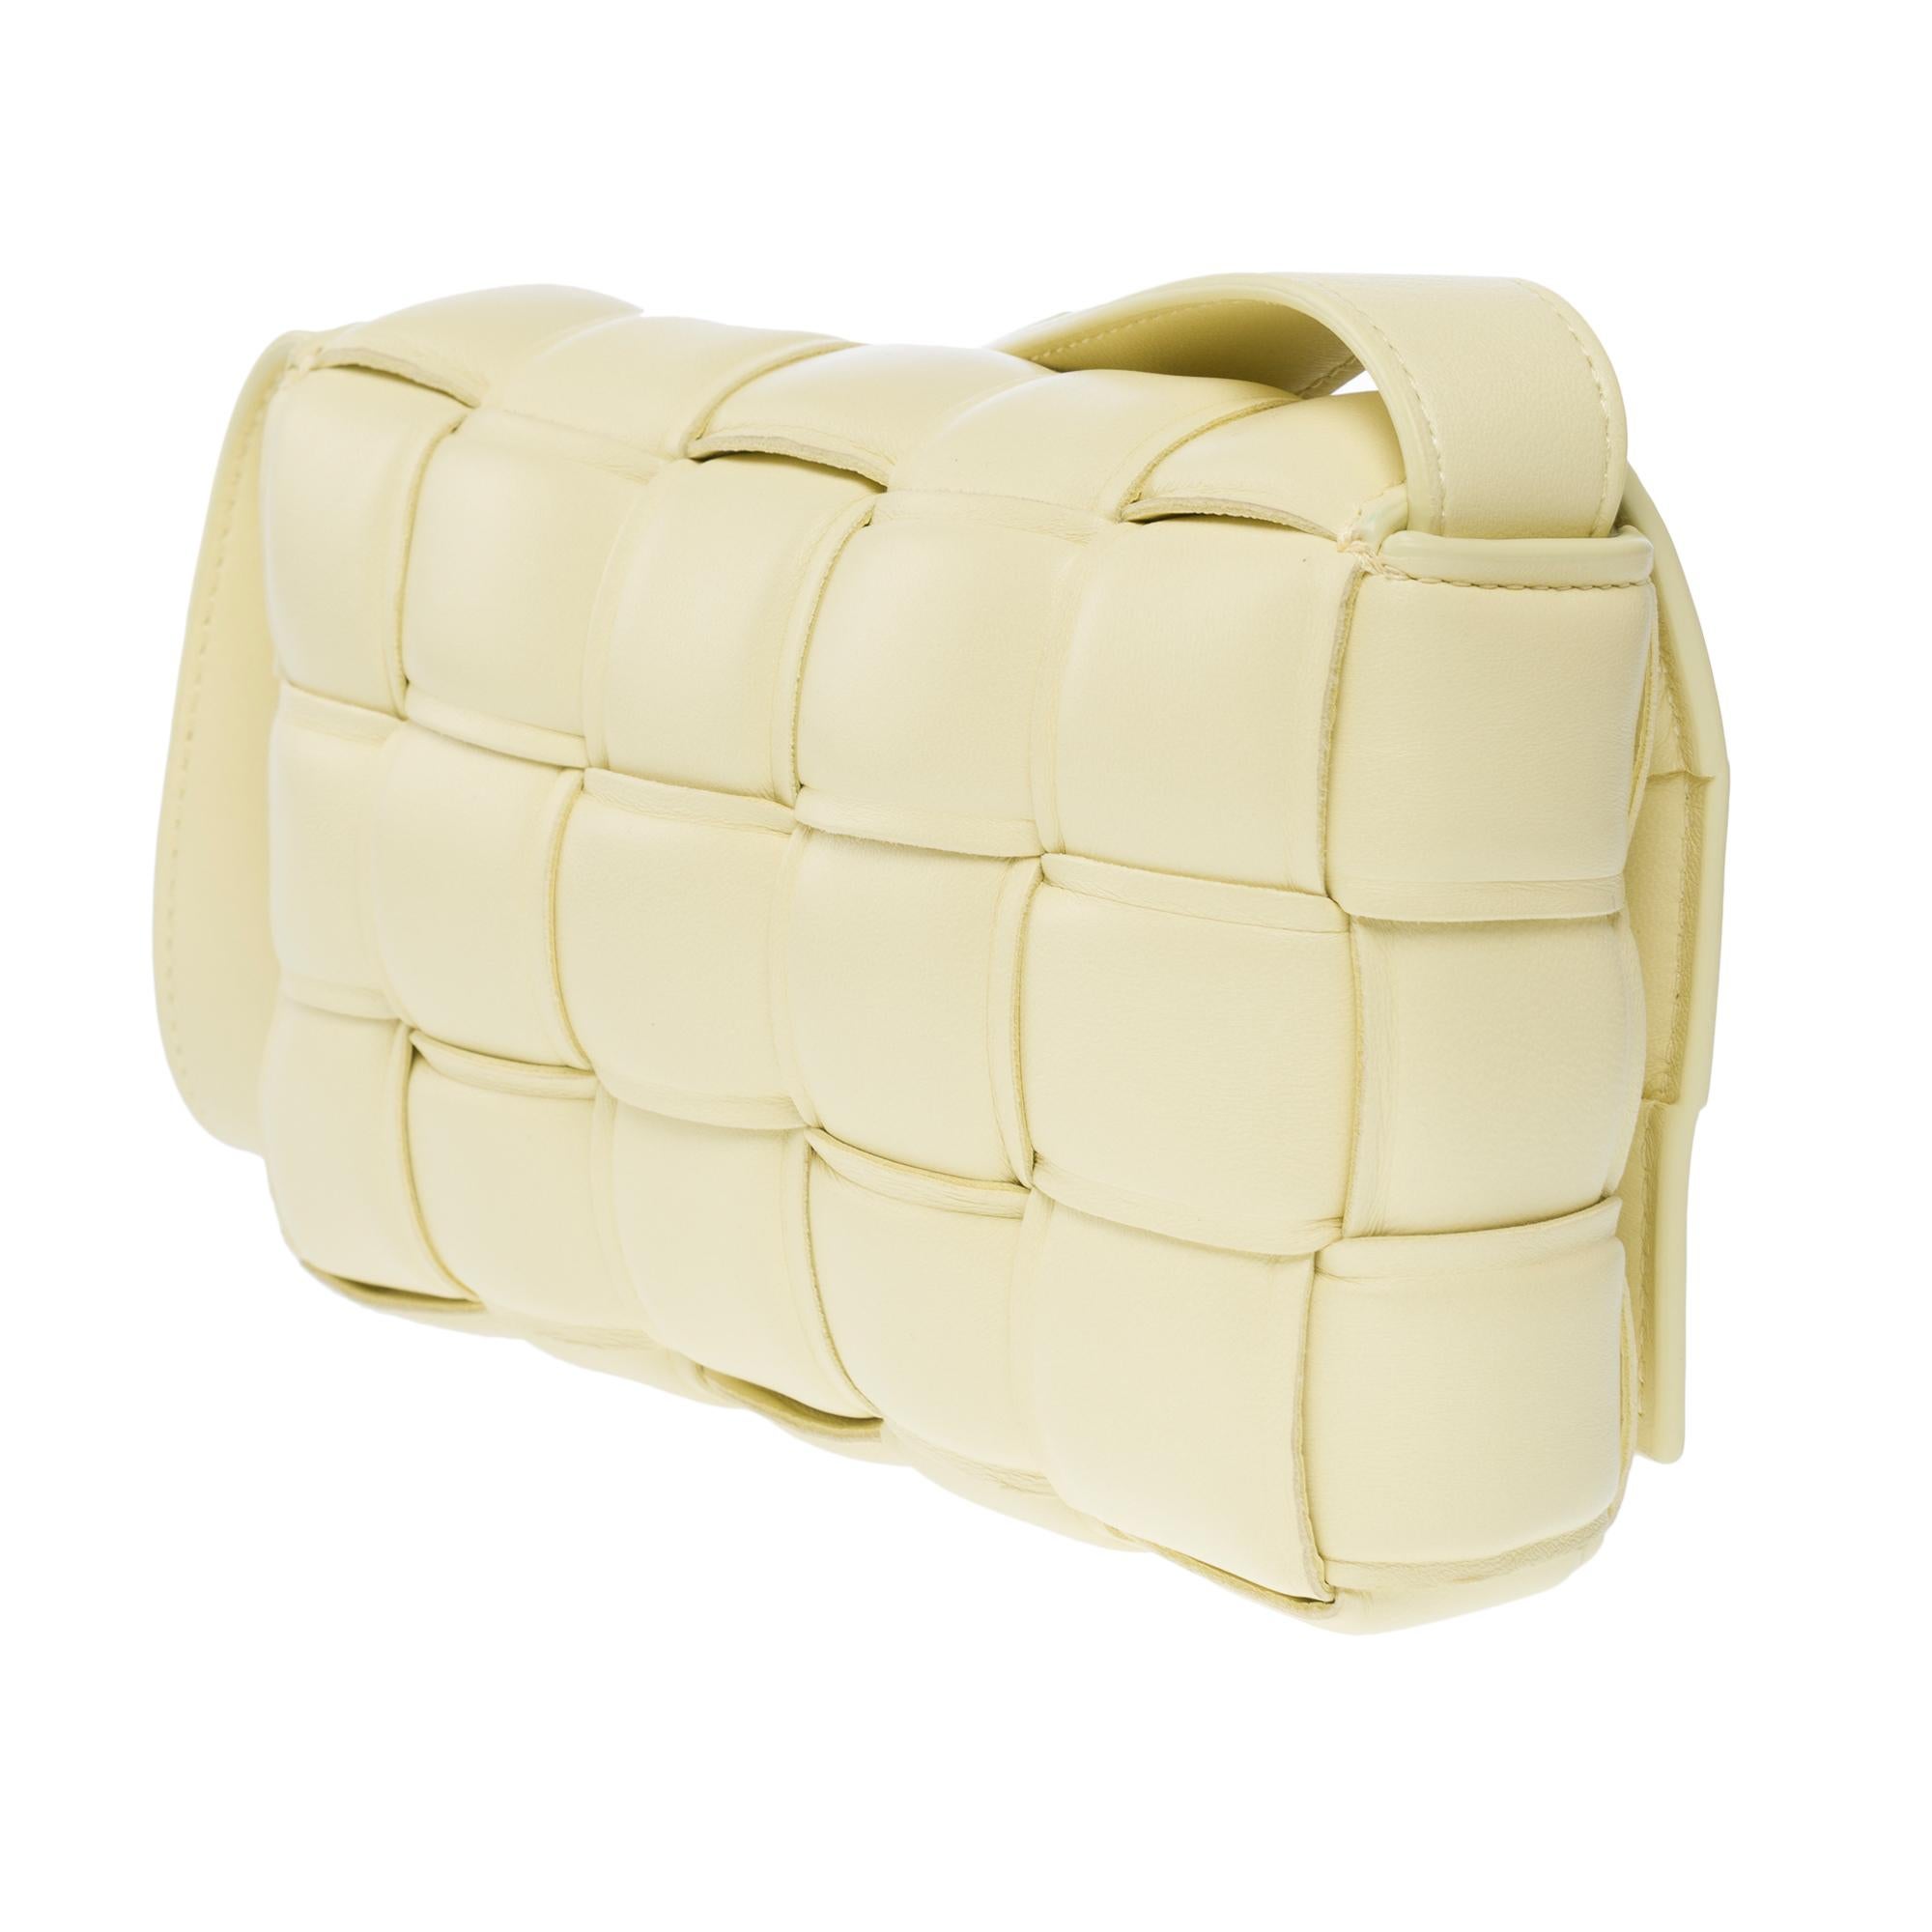 Bottega Veneta Cassette 19 shoulder bag in beige lambskin leather, GHW For Sale 2